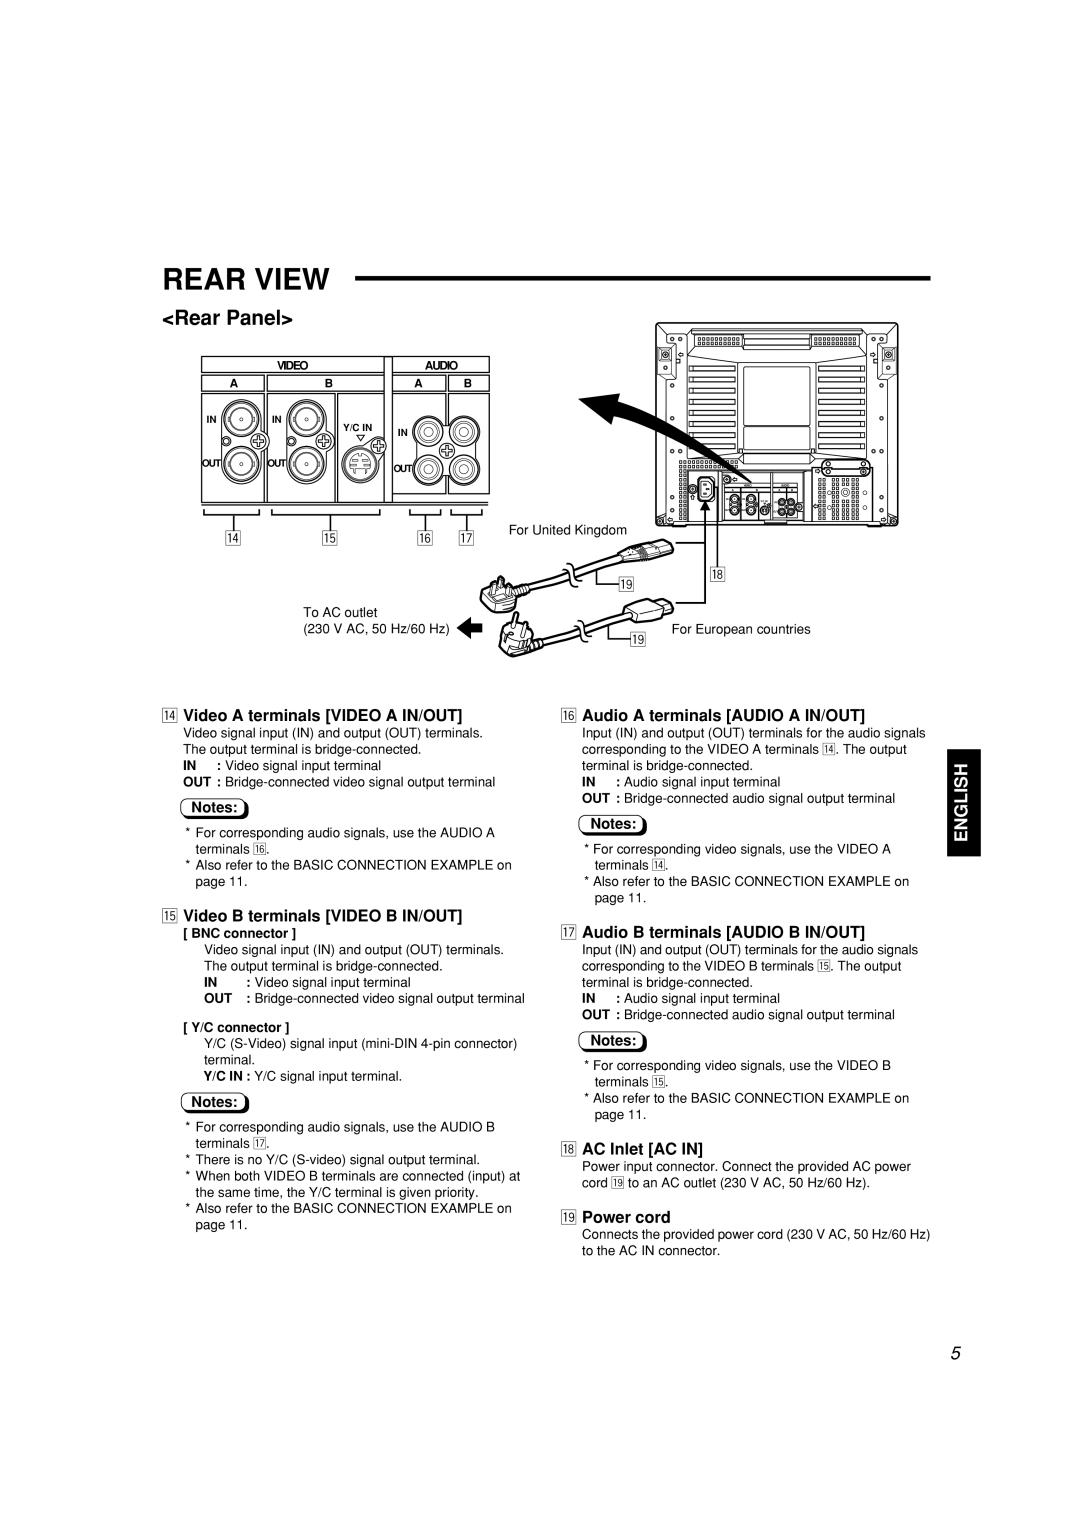 JVC LCT2141-001A-H manual Rear View, Rear Panel, English 